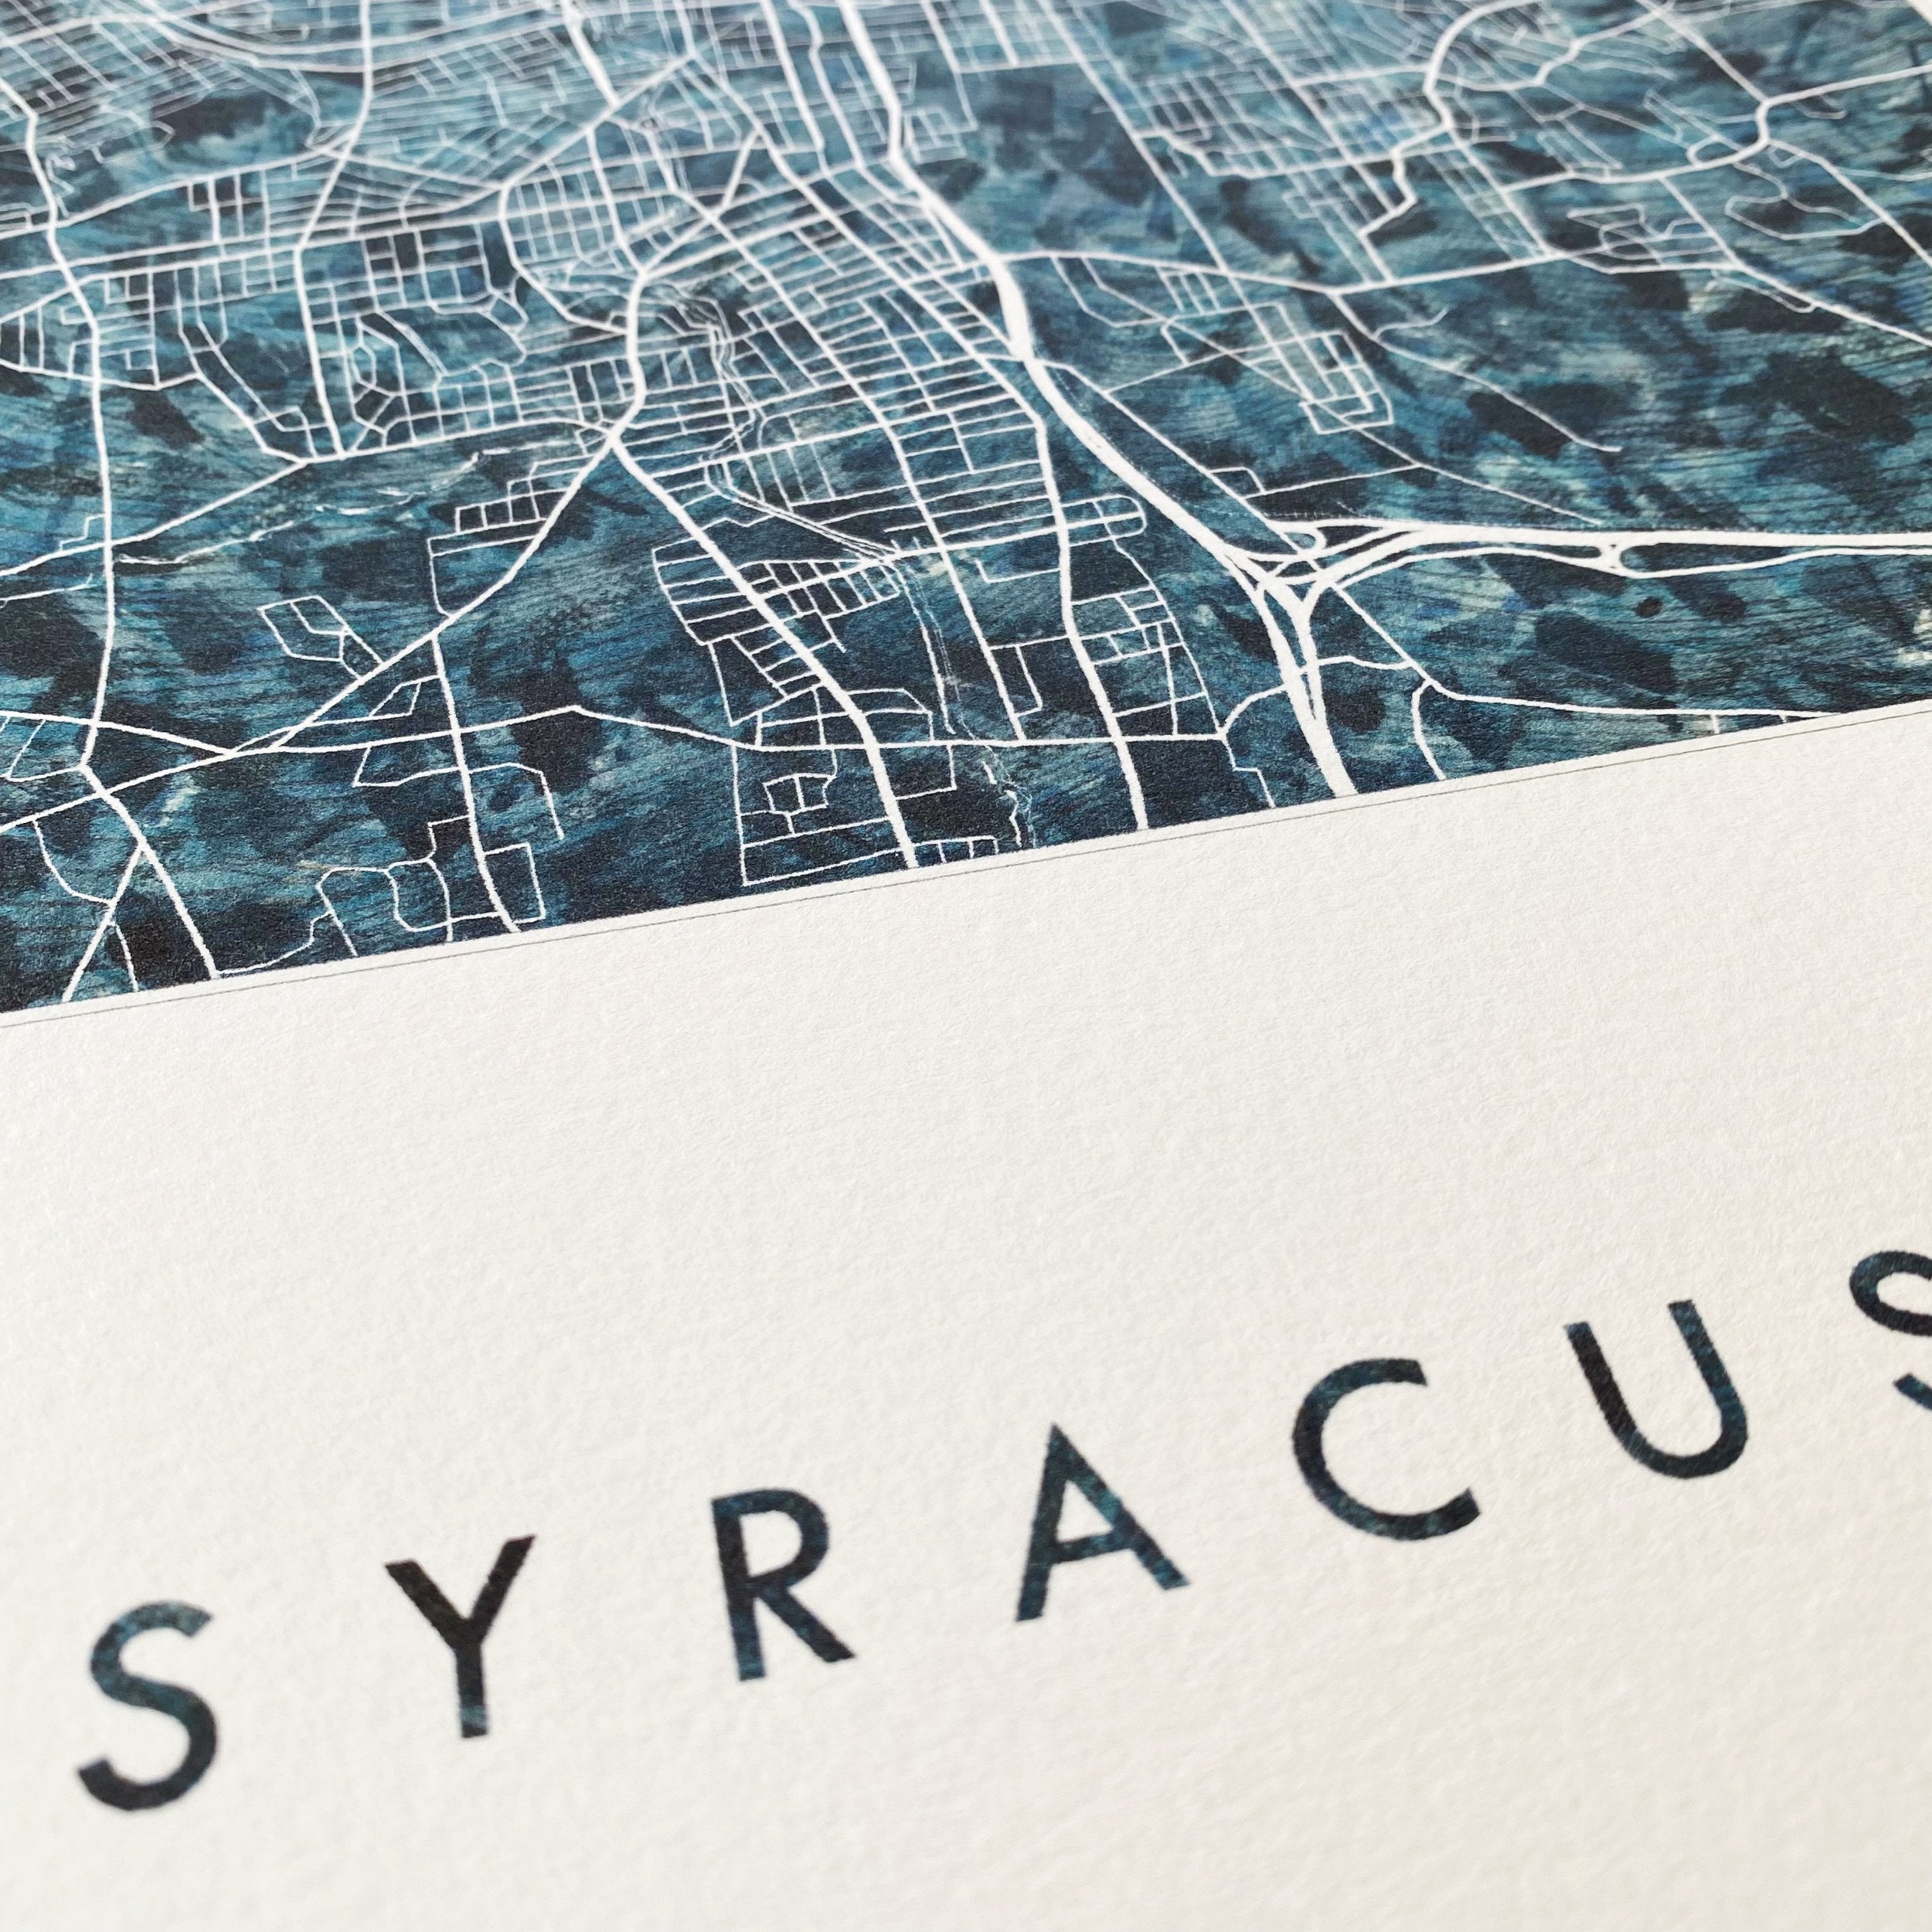 SYRACUSE Urban Fabrics City Map: PRINT